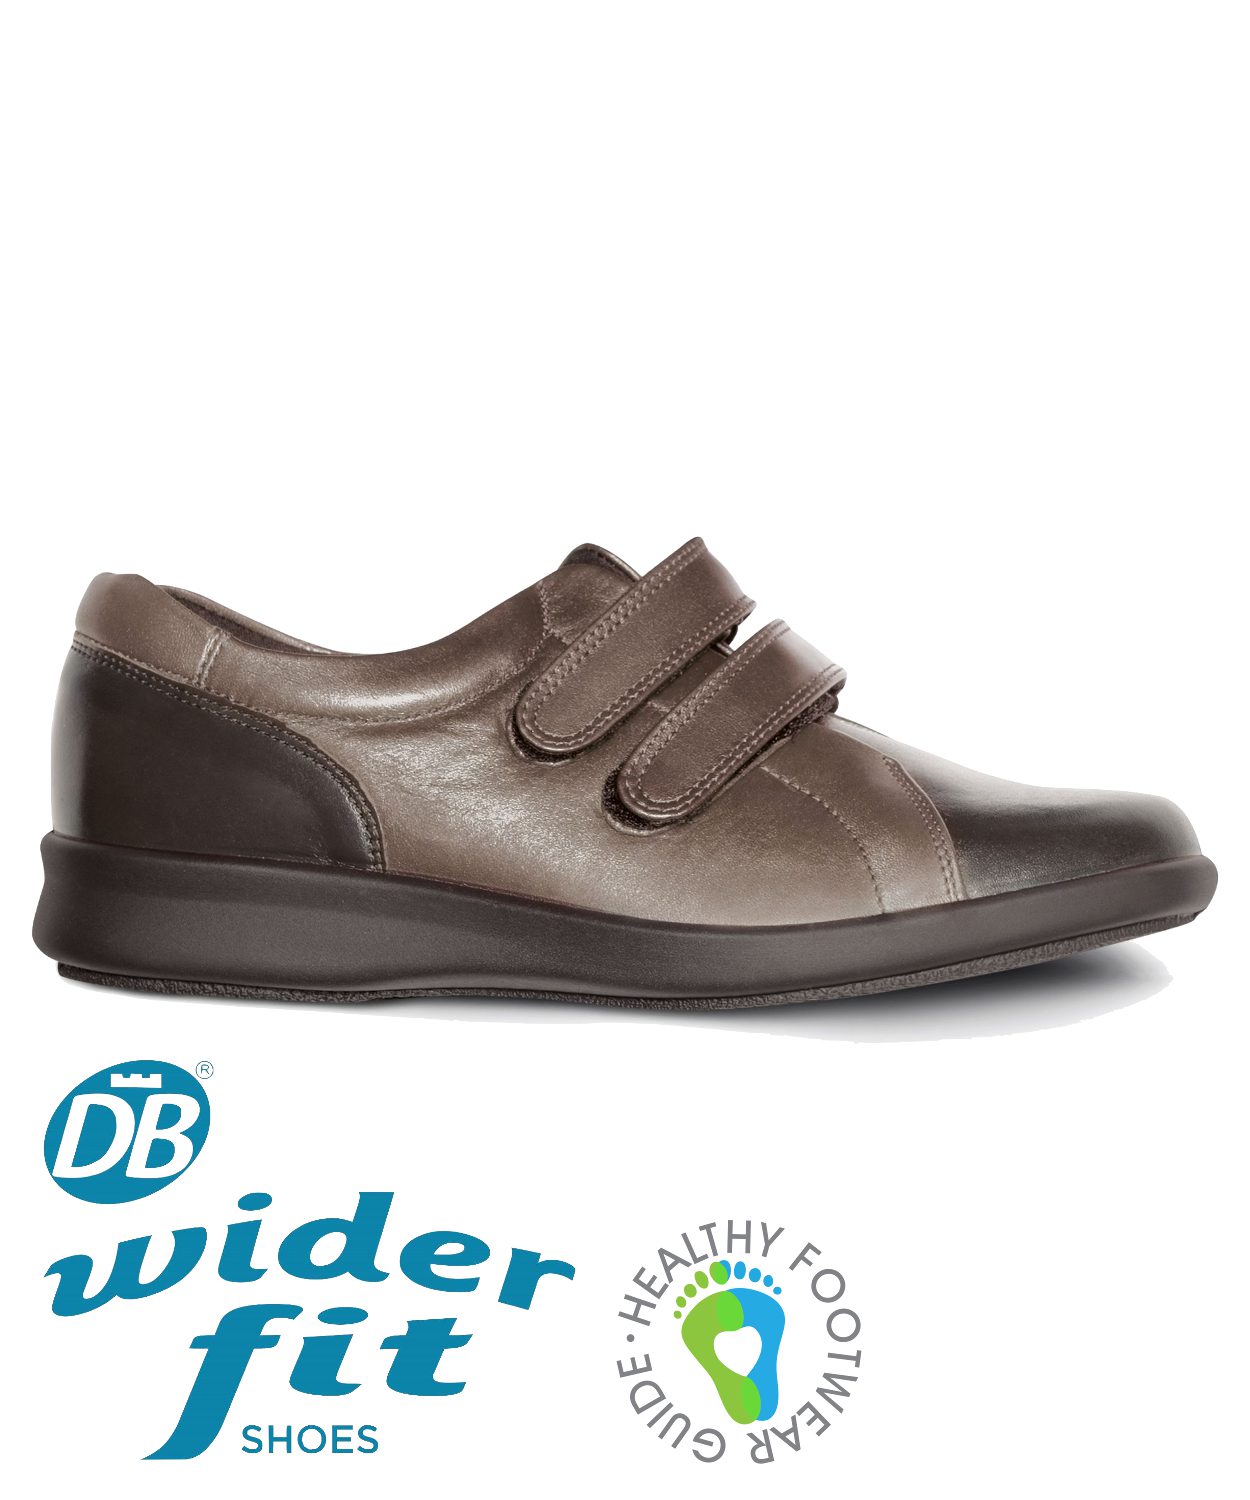 Wider fit ladies shoes - Harrogate 